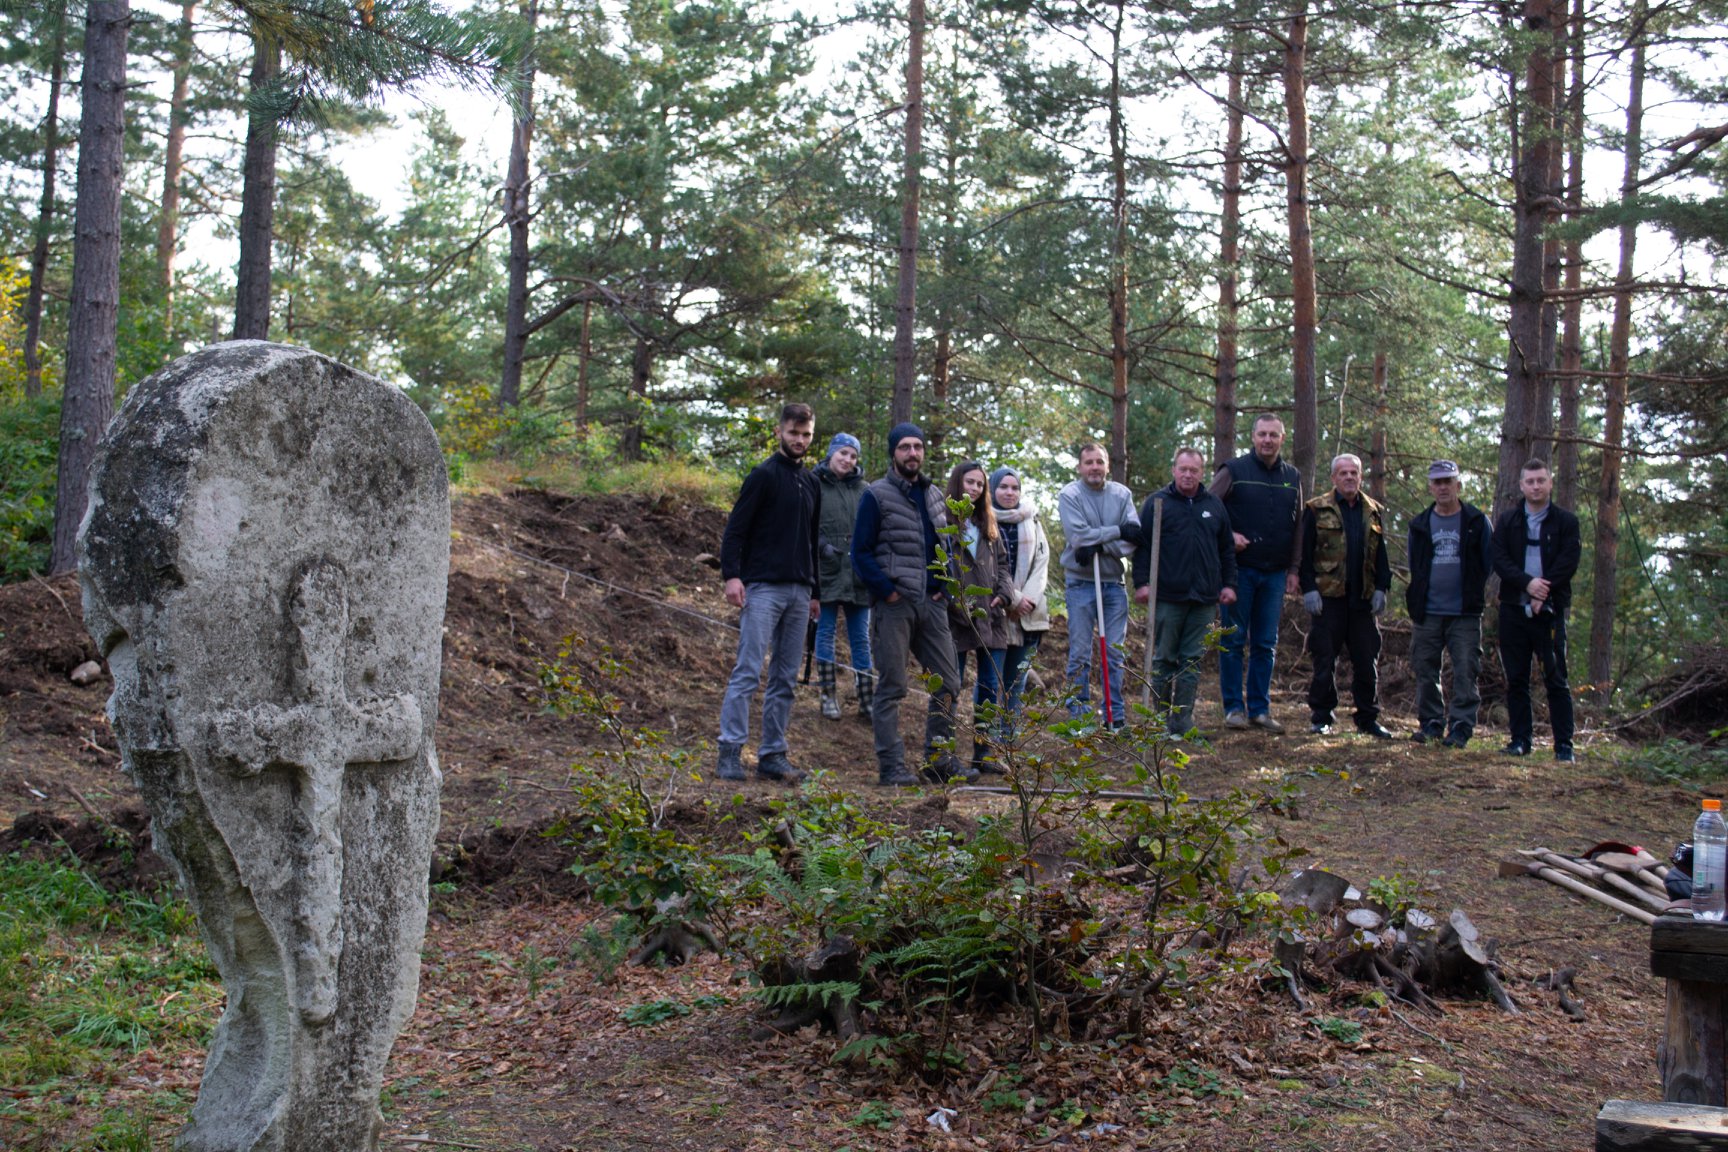  Arheološko iskopavanje na lokalitetu Markov kamen kod Zenice